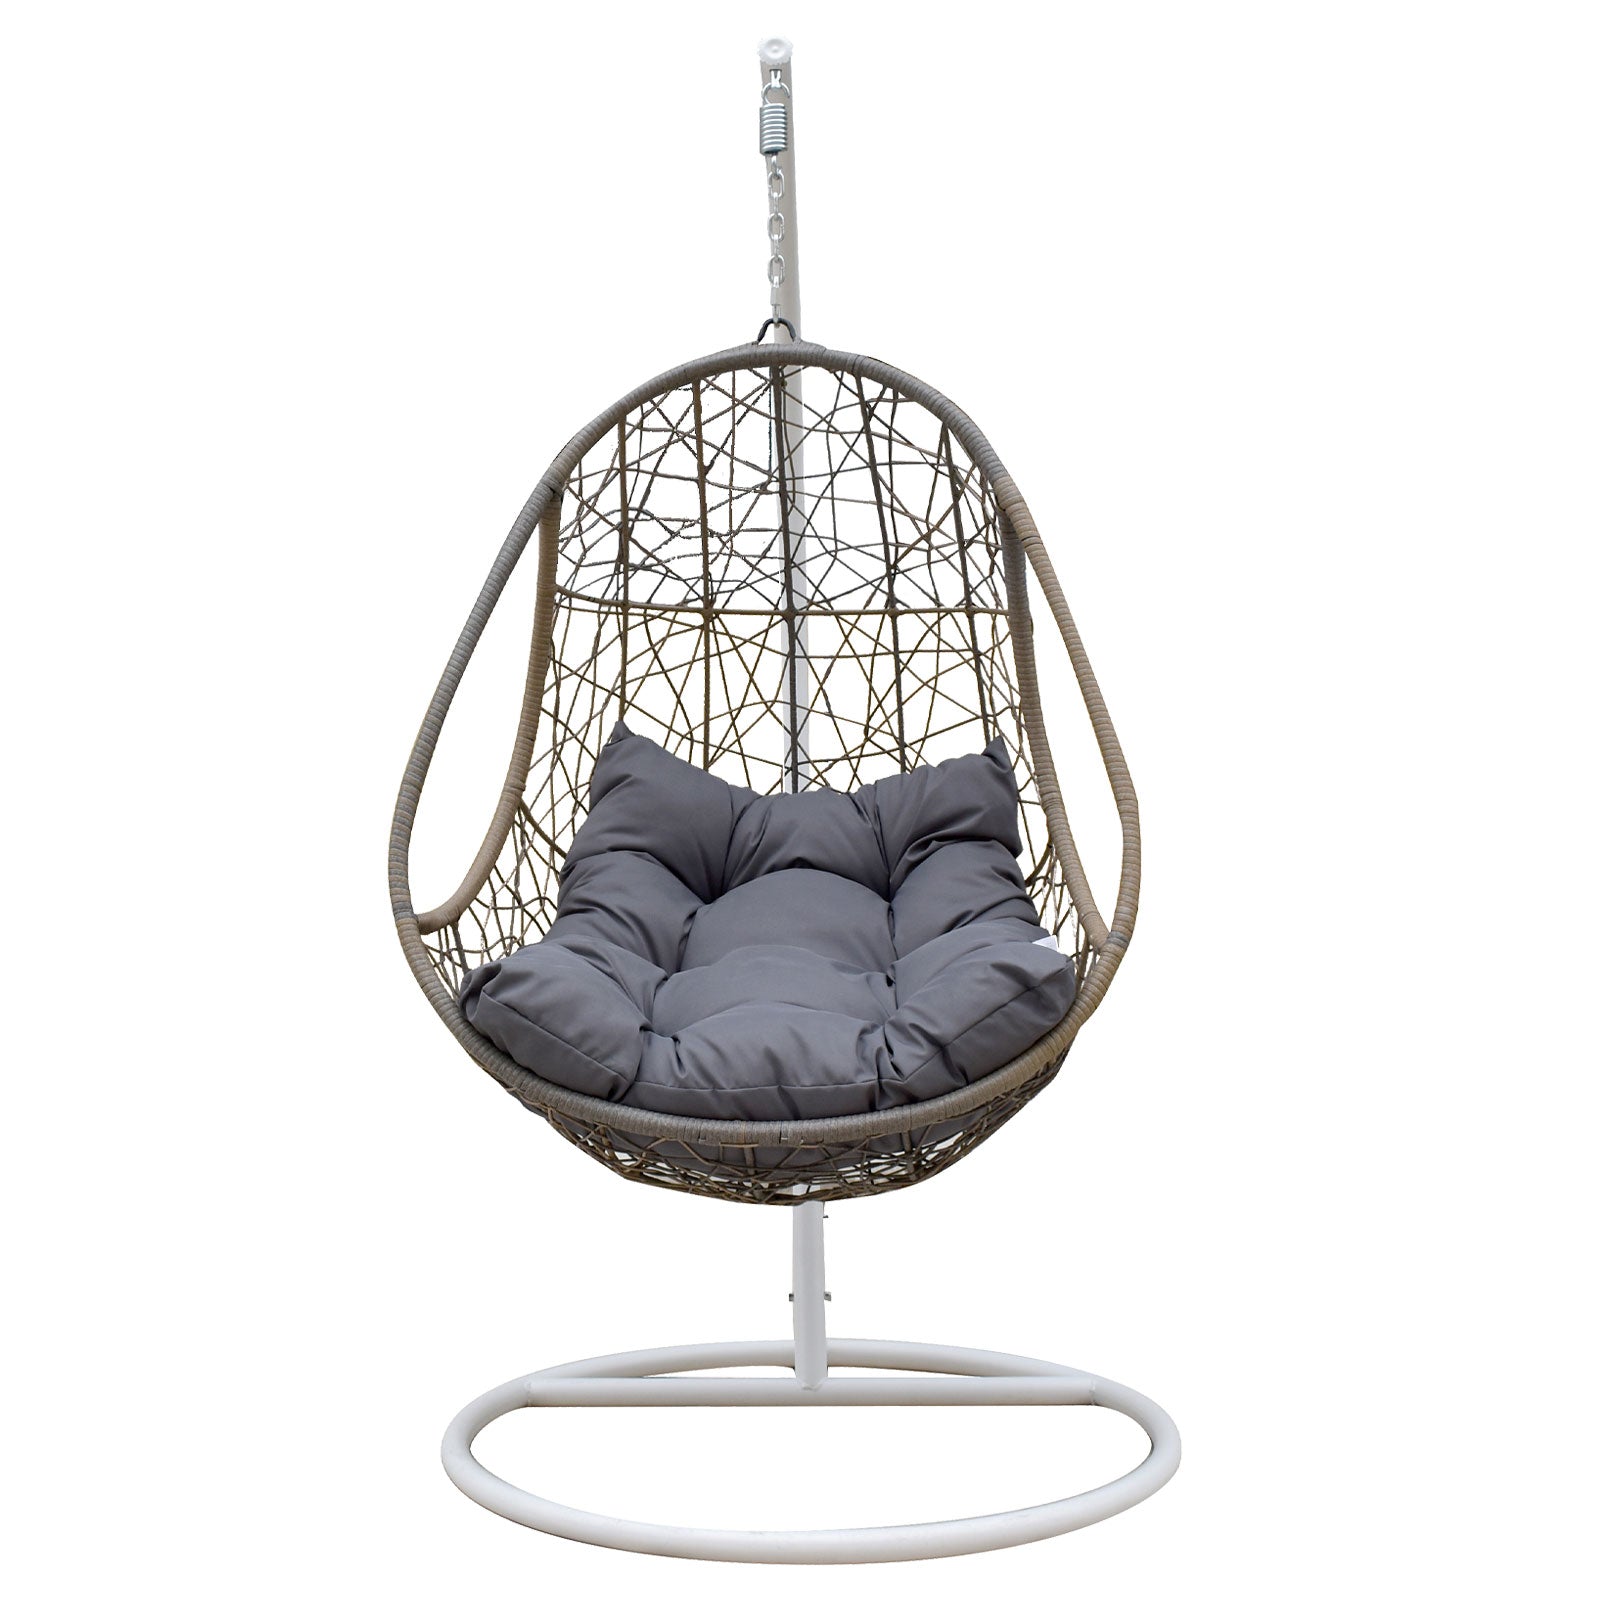 Arcadia Furniture Rocking Egg Chair - Oatmeal and Grey